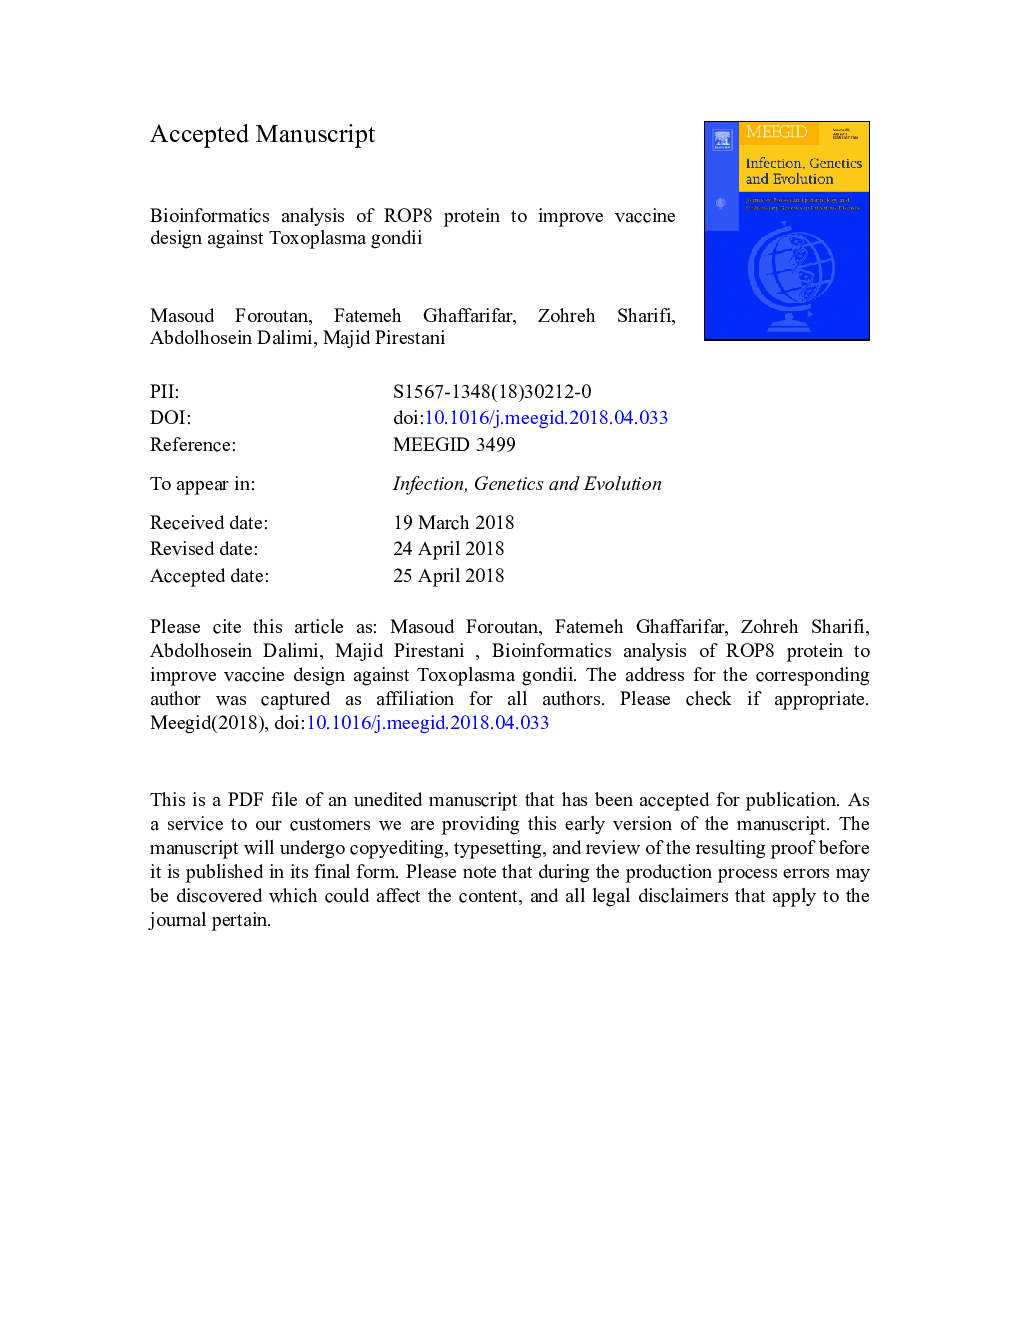 Bioinformatics analysis of ROP8 protein to improve vaccine design against Toxoplasma gondii